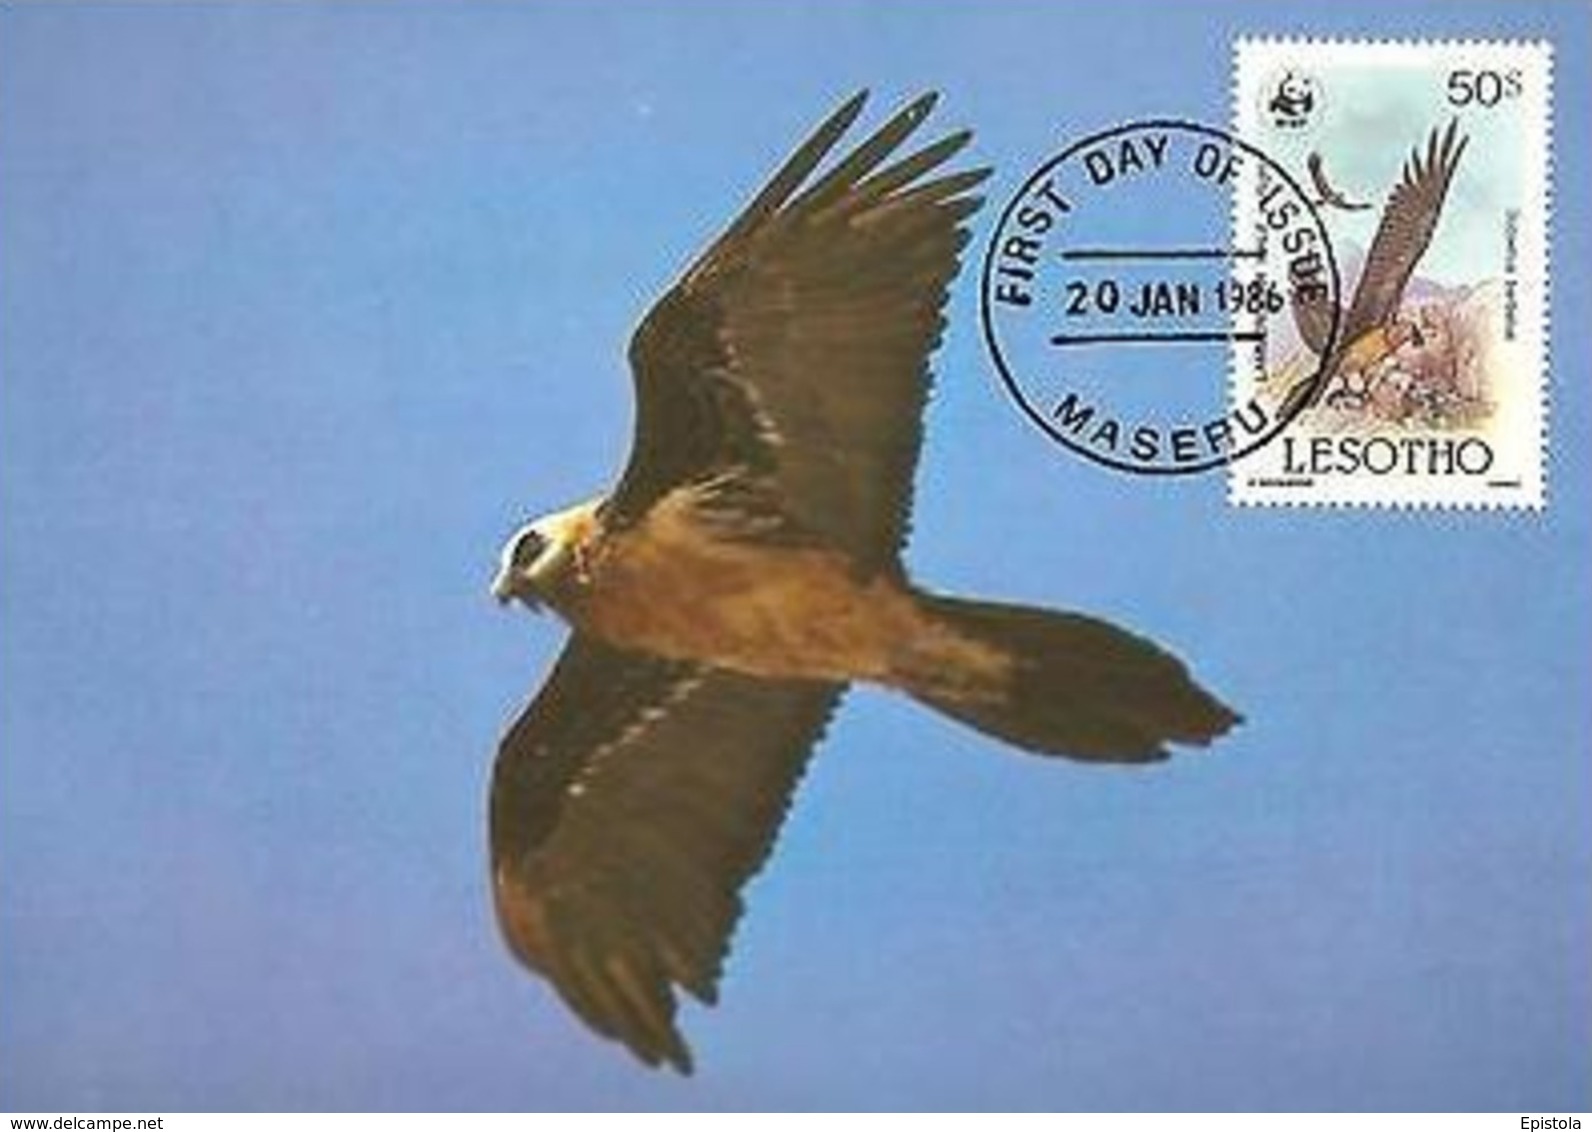 Lammergeier Vulture Bird Of Prey Maxi Card Postcard FDC WWF Lesotho Maseru - Lesotho